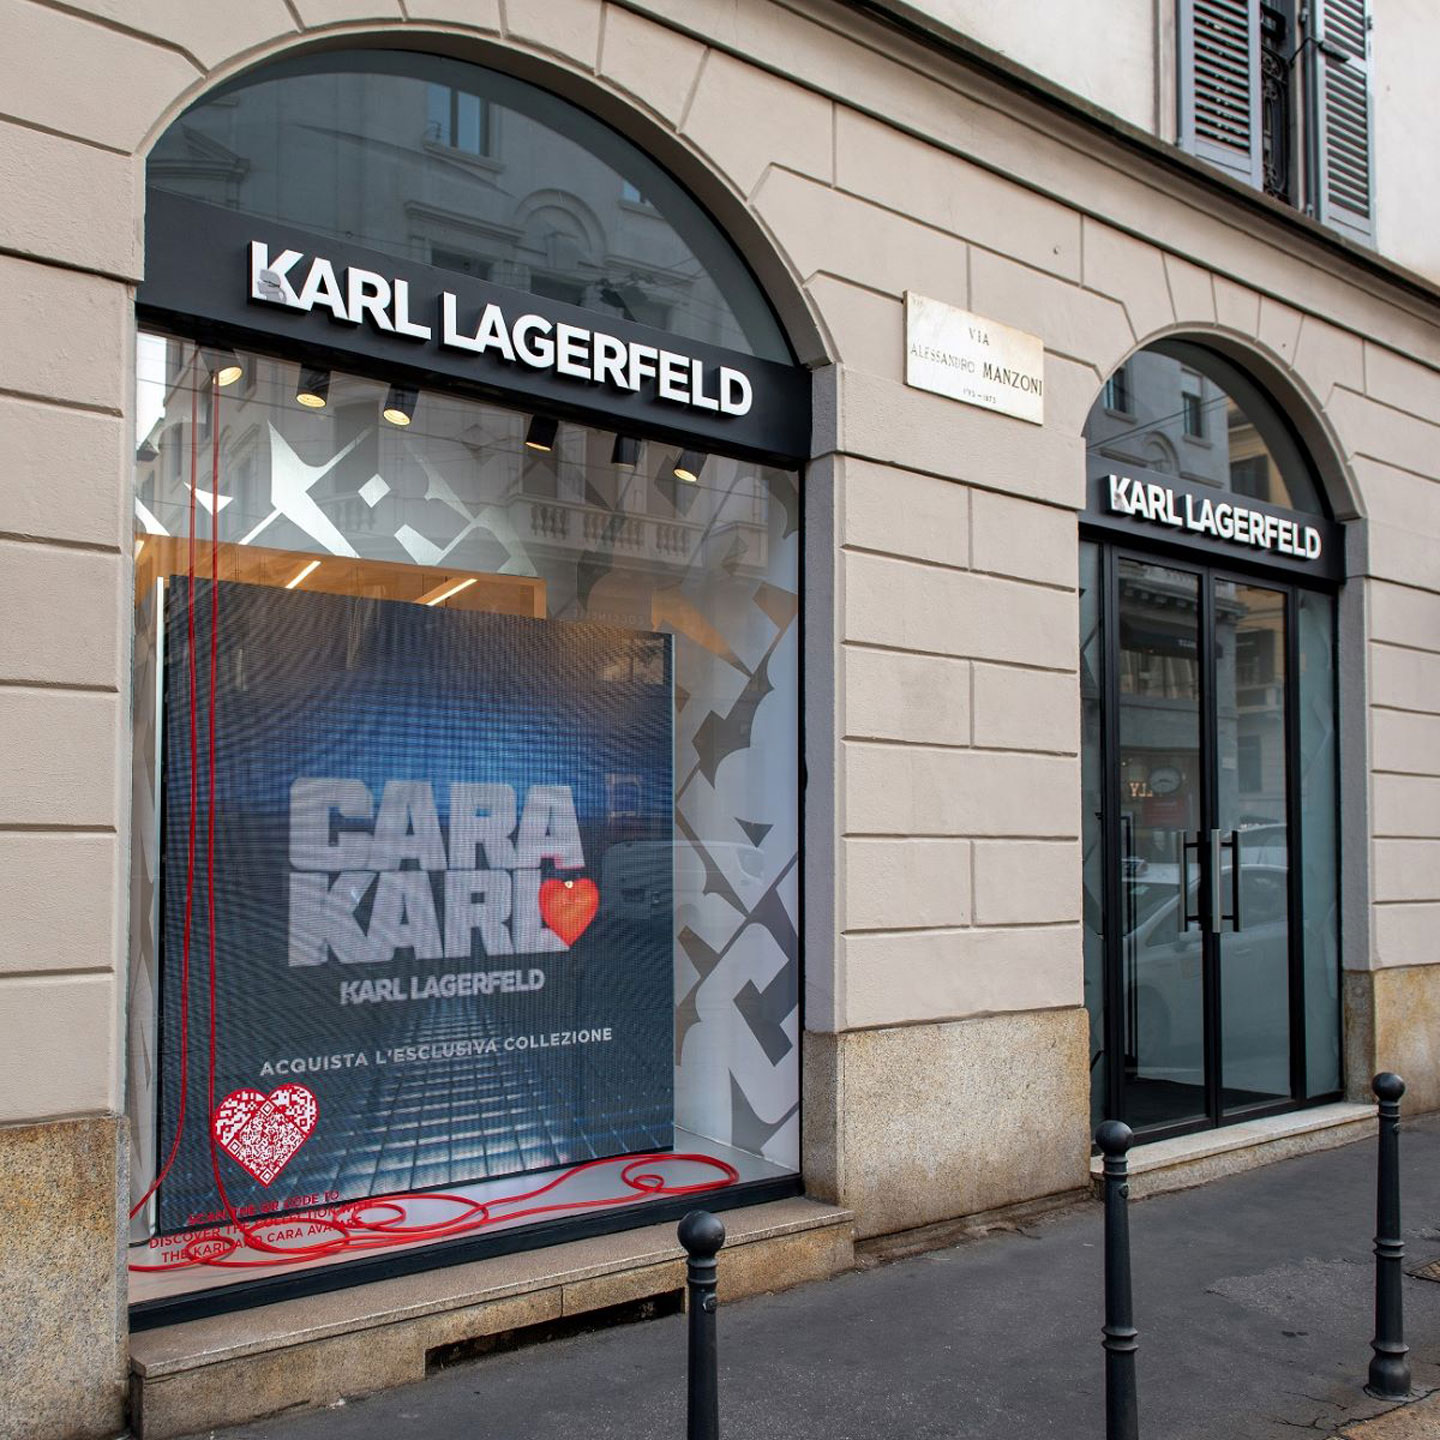 Karl Lagerfeld's pop-up store in via Manzoni, Milan, opened during Fashion week